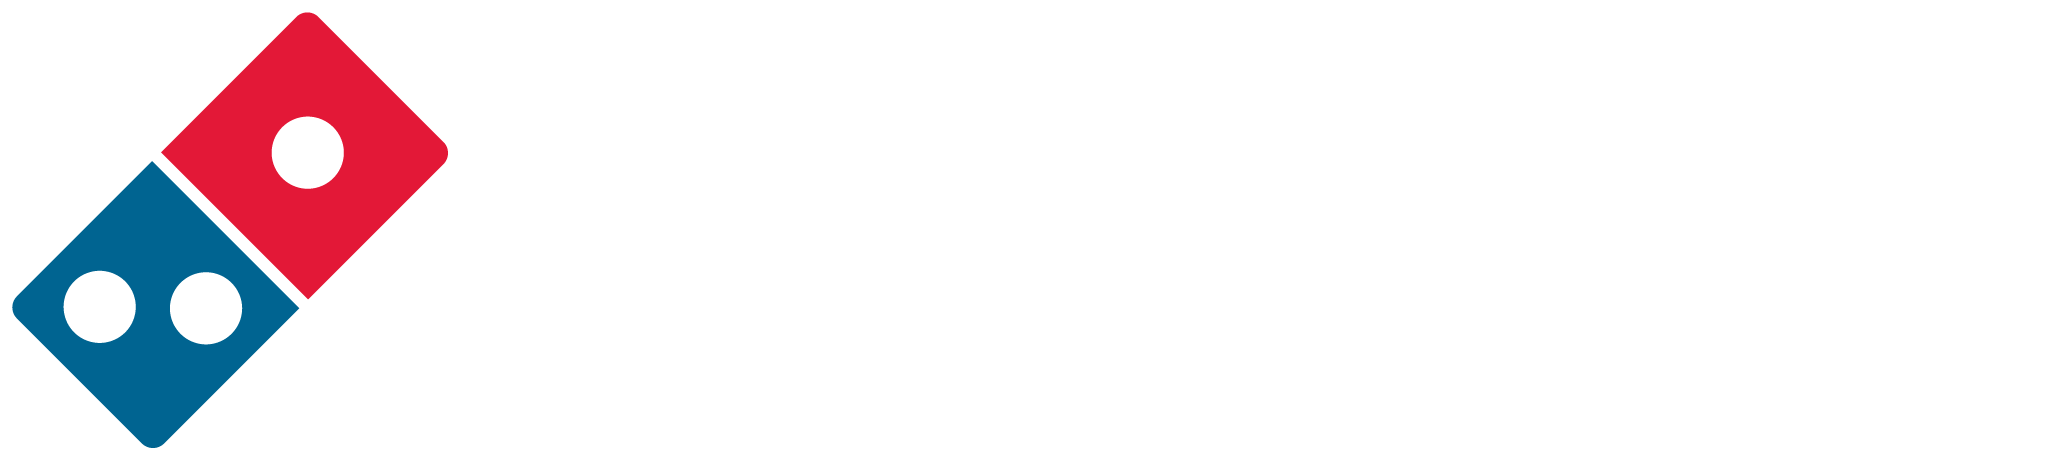 dominos png logo 4173